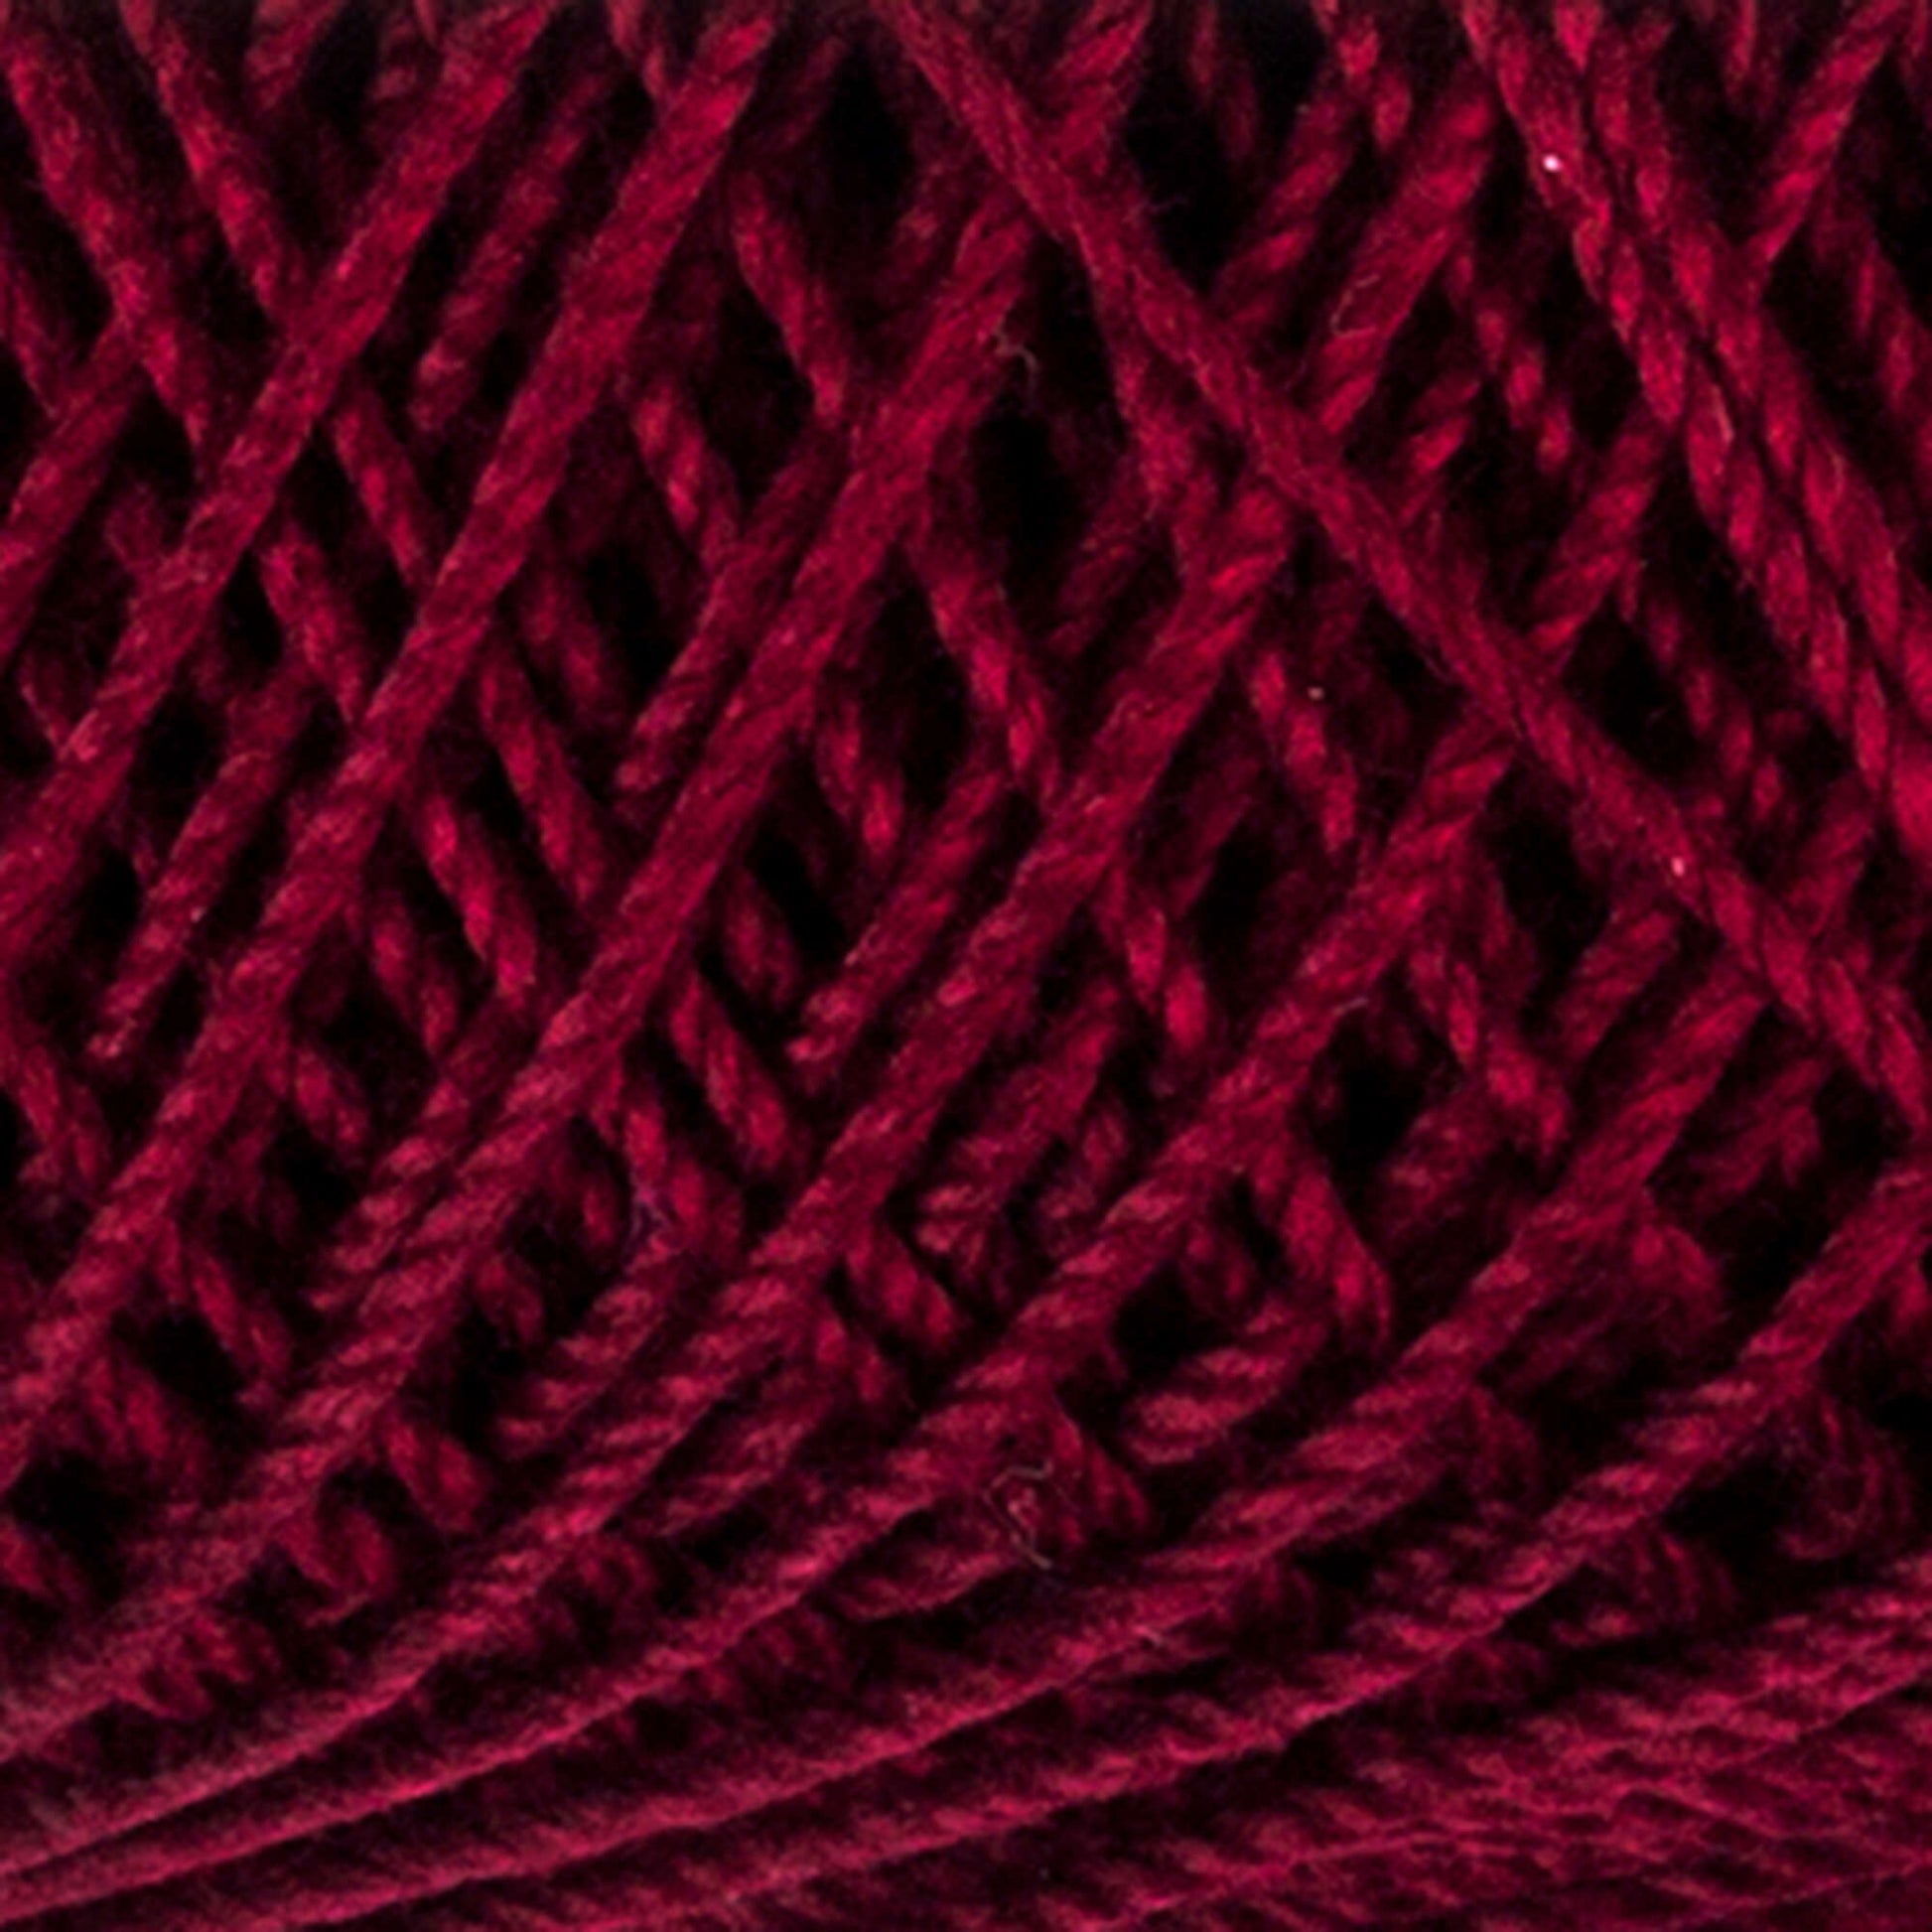 Red Heart Classic Crochet Thread Size 10 Burgundy